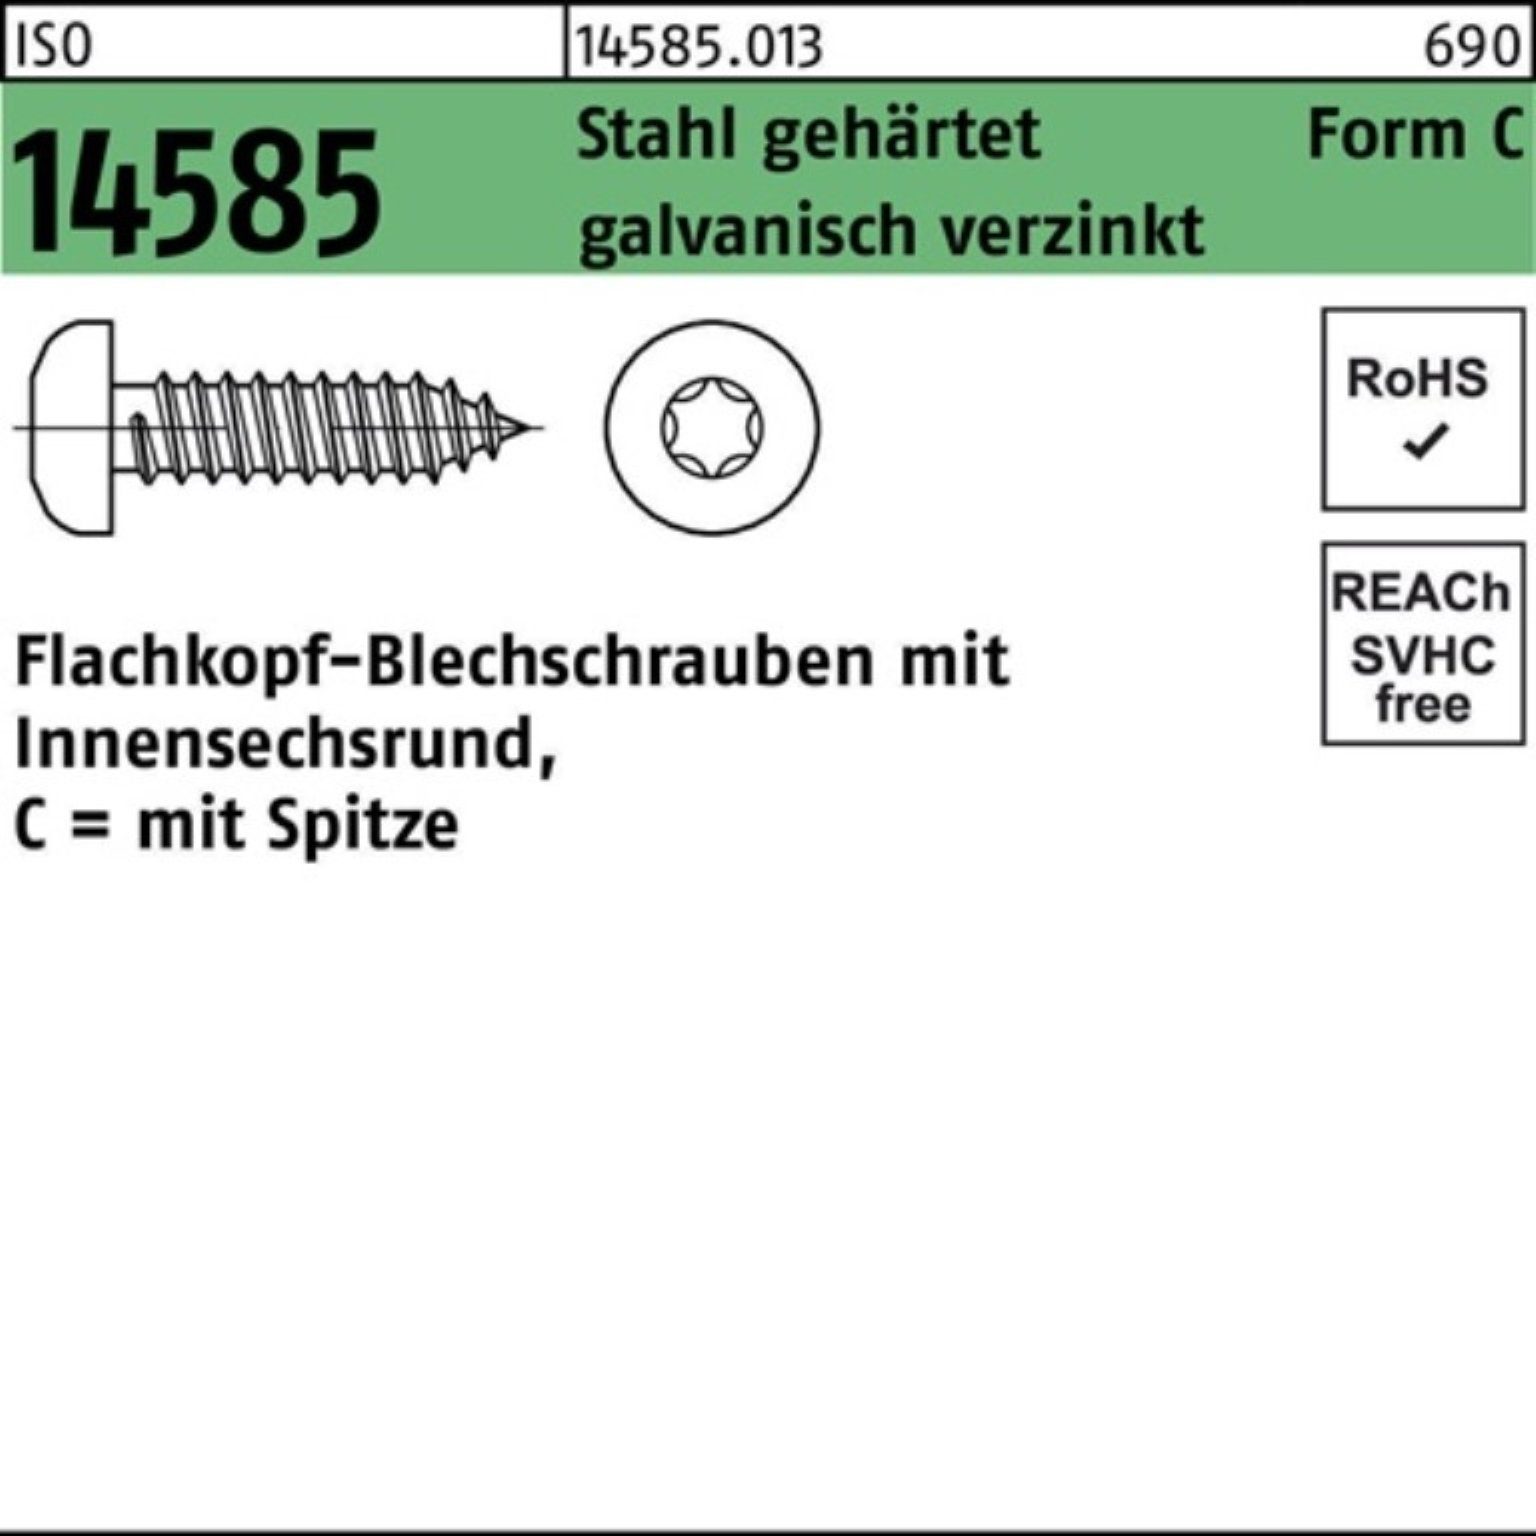 Reyher Blechschraube 500er Pack Blechschraube 14585 Stahl geh. ISO ISR/Spitze -C-T25 5,5x22